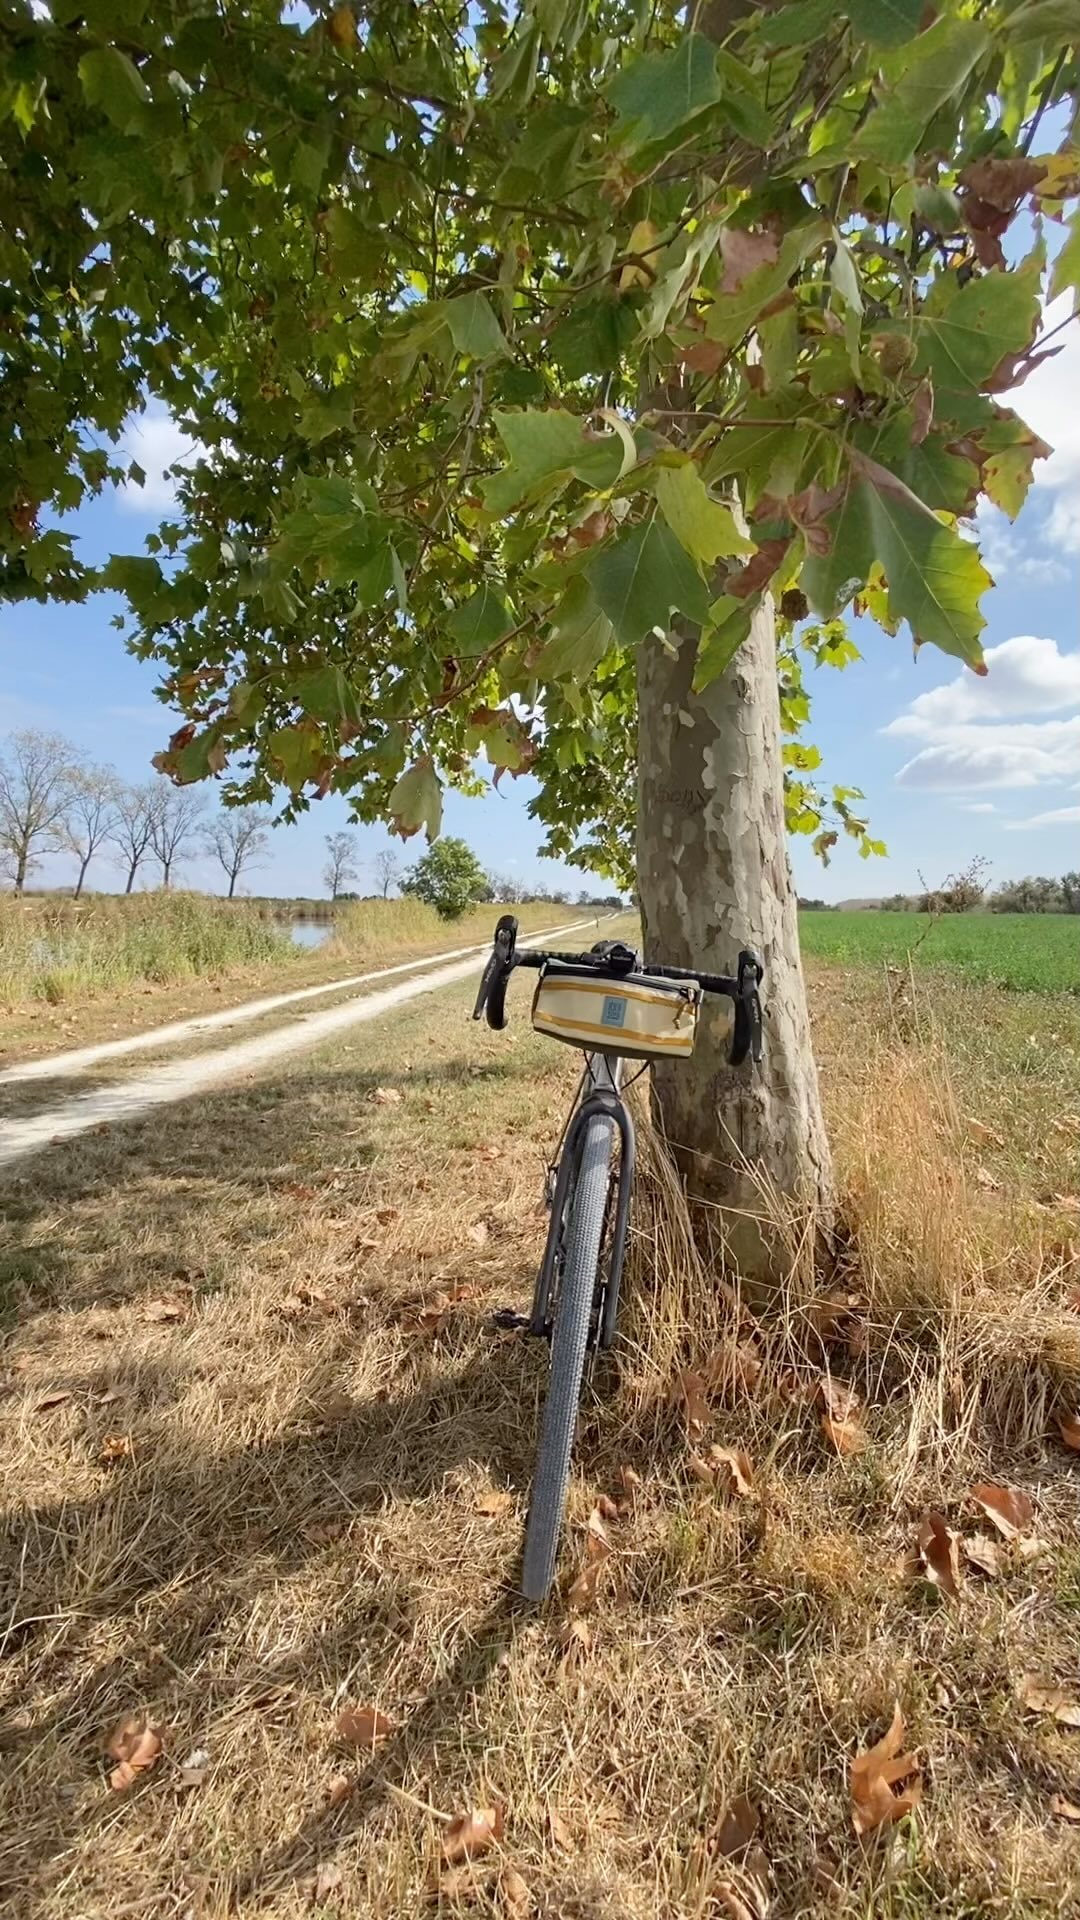 Gravel d’automne 

#automne #bruitdesfeuilles #marans #gravel #grvl #gravillon #gravillonsite #leguidondanslatete #cycling #velo #bicyclette #bicicleta #bicla #bici #bicicletta #bicycle #bike #cycle #fahrrad #自転車 #自行车